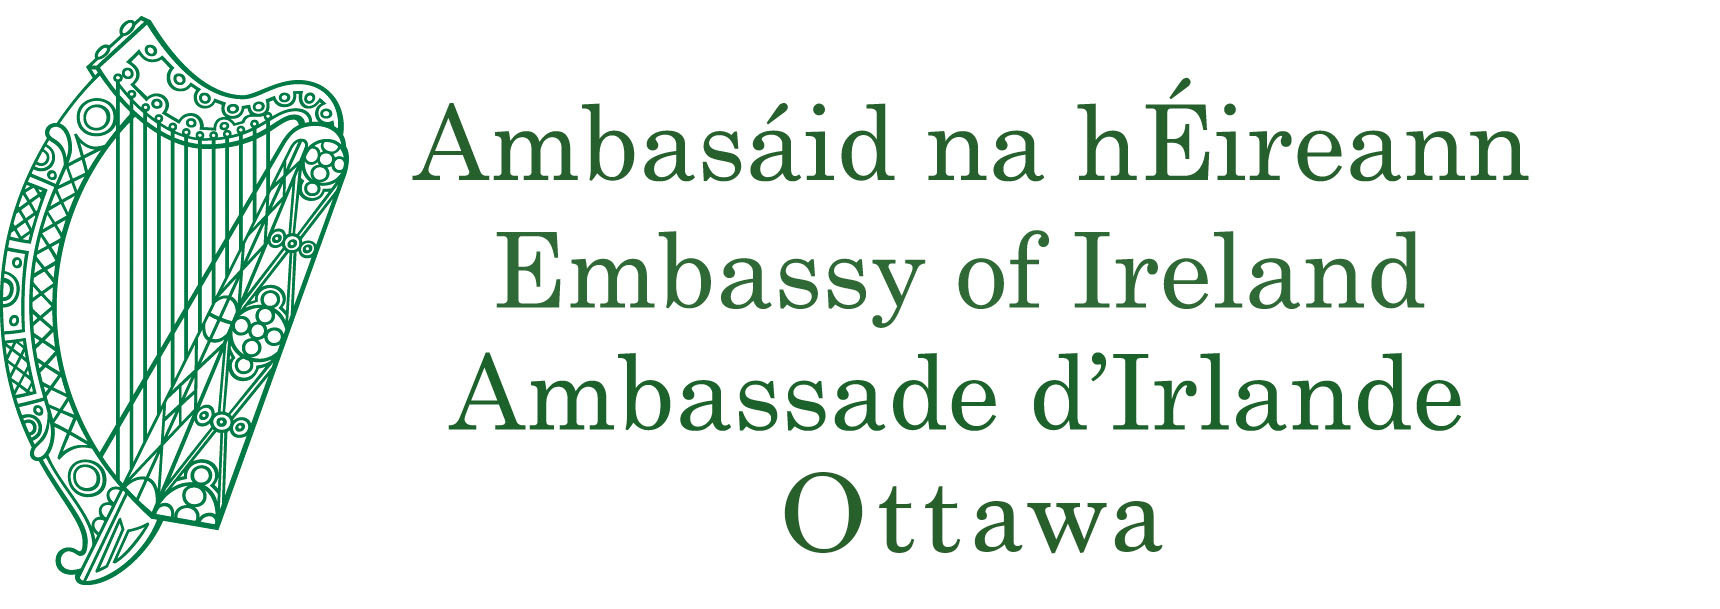 Ambassade d'Irlande Ottawa